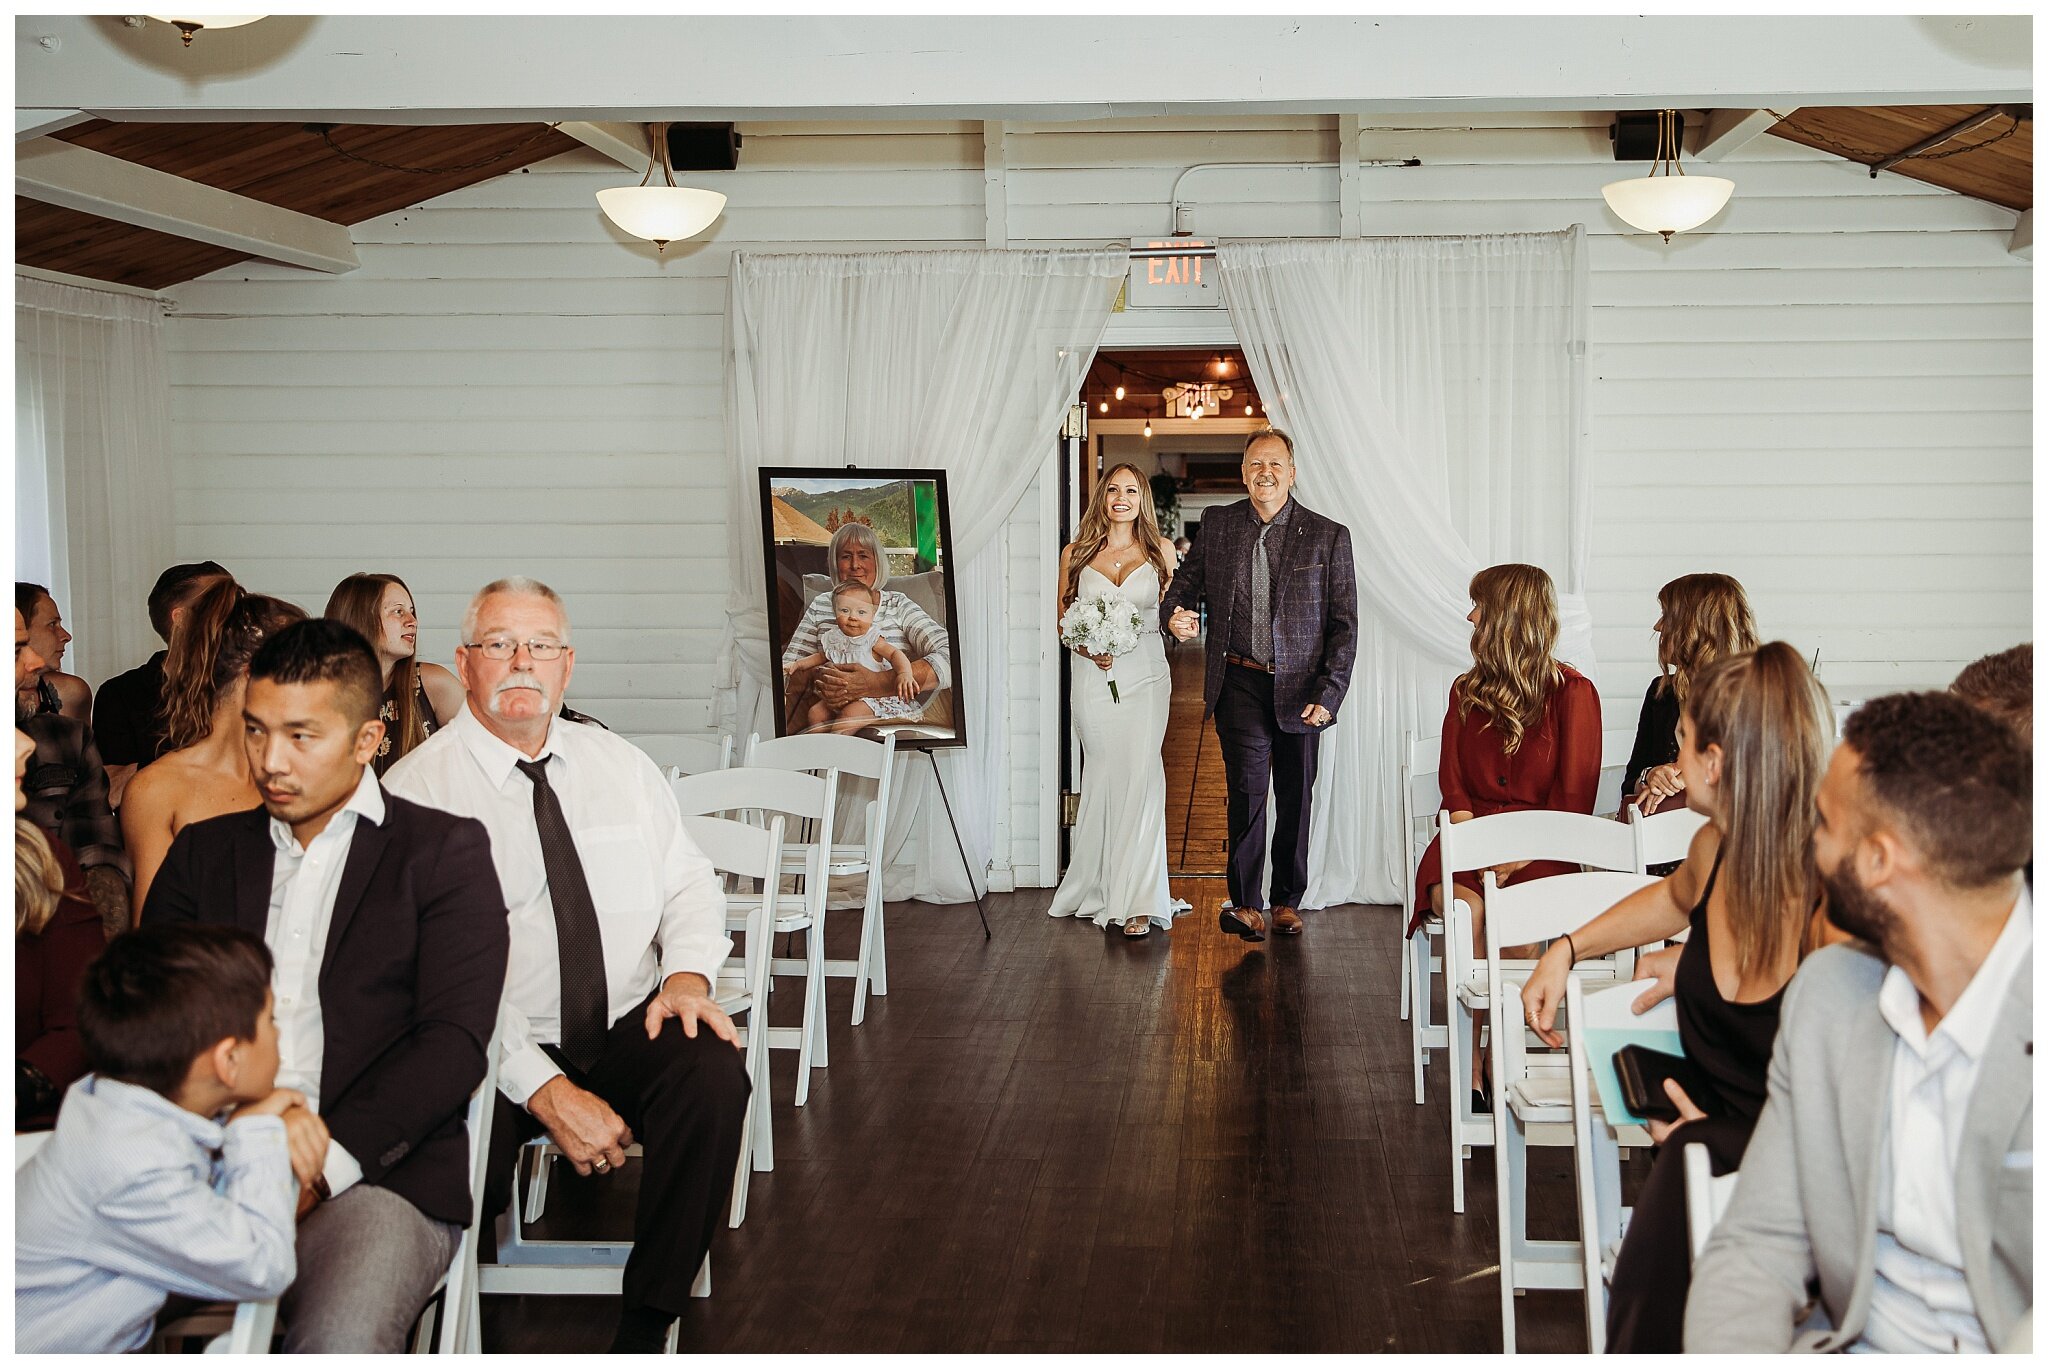 Chilliwack Wedding Photographer at the Falls Golf Course Wedding Venue